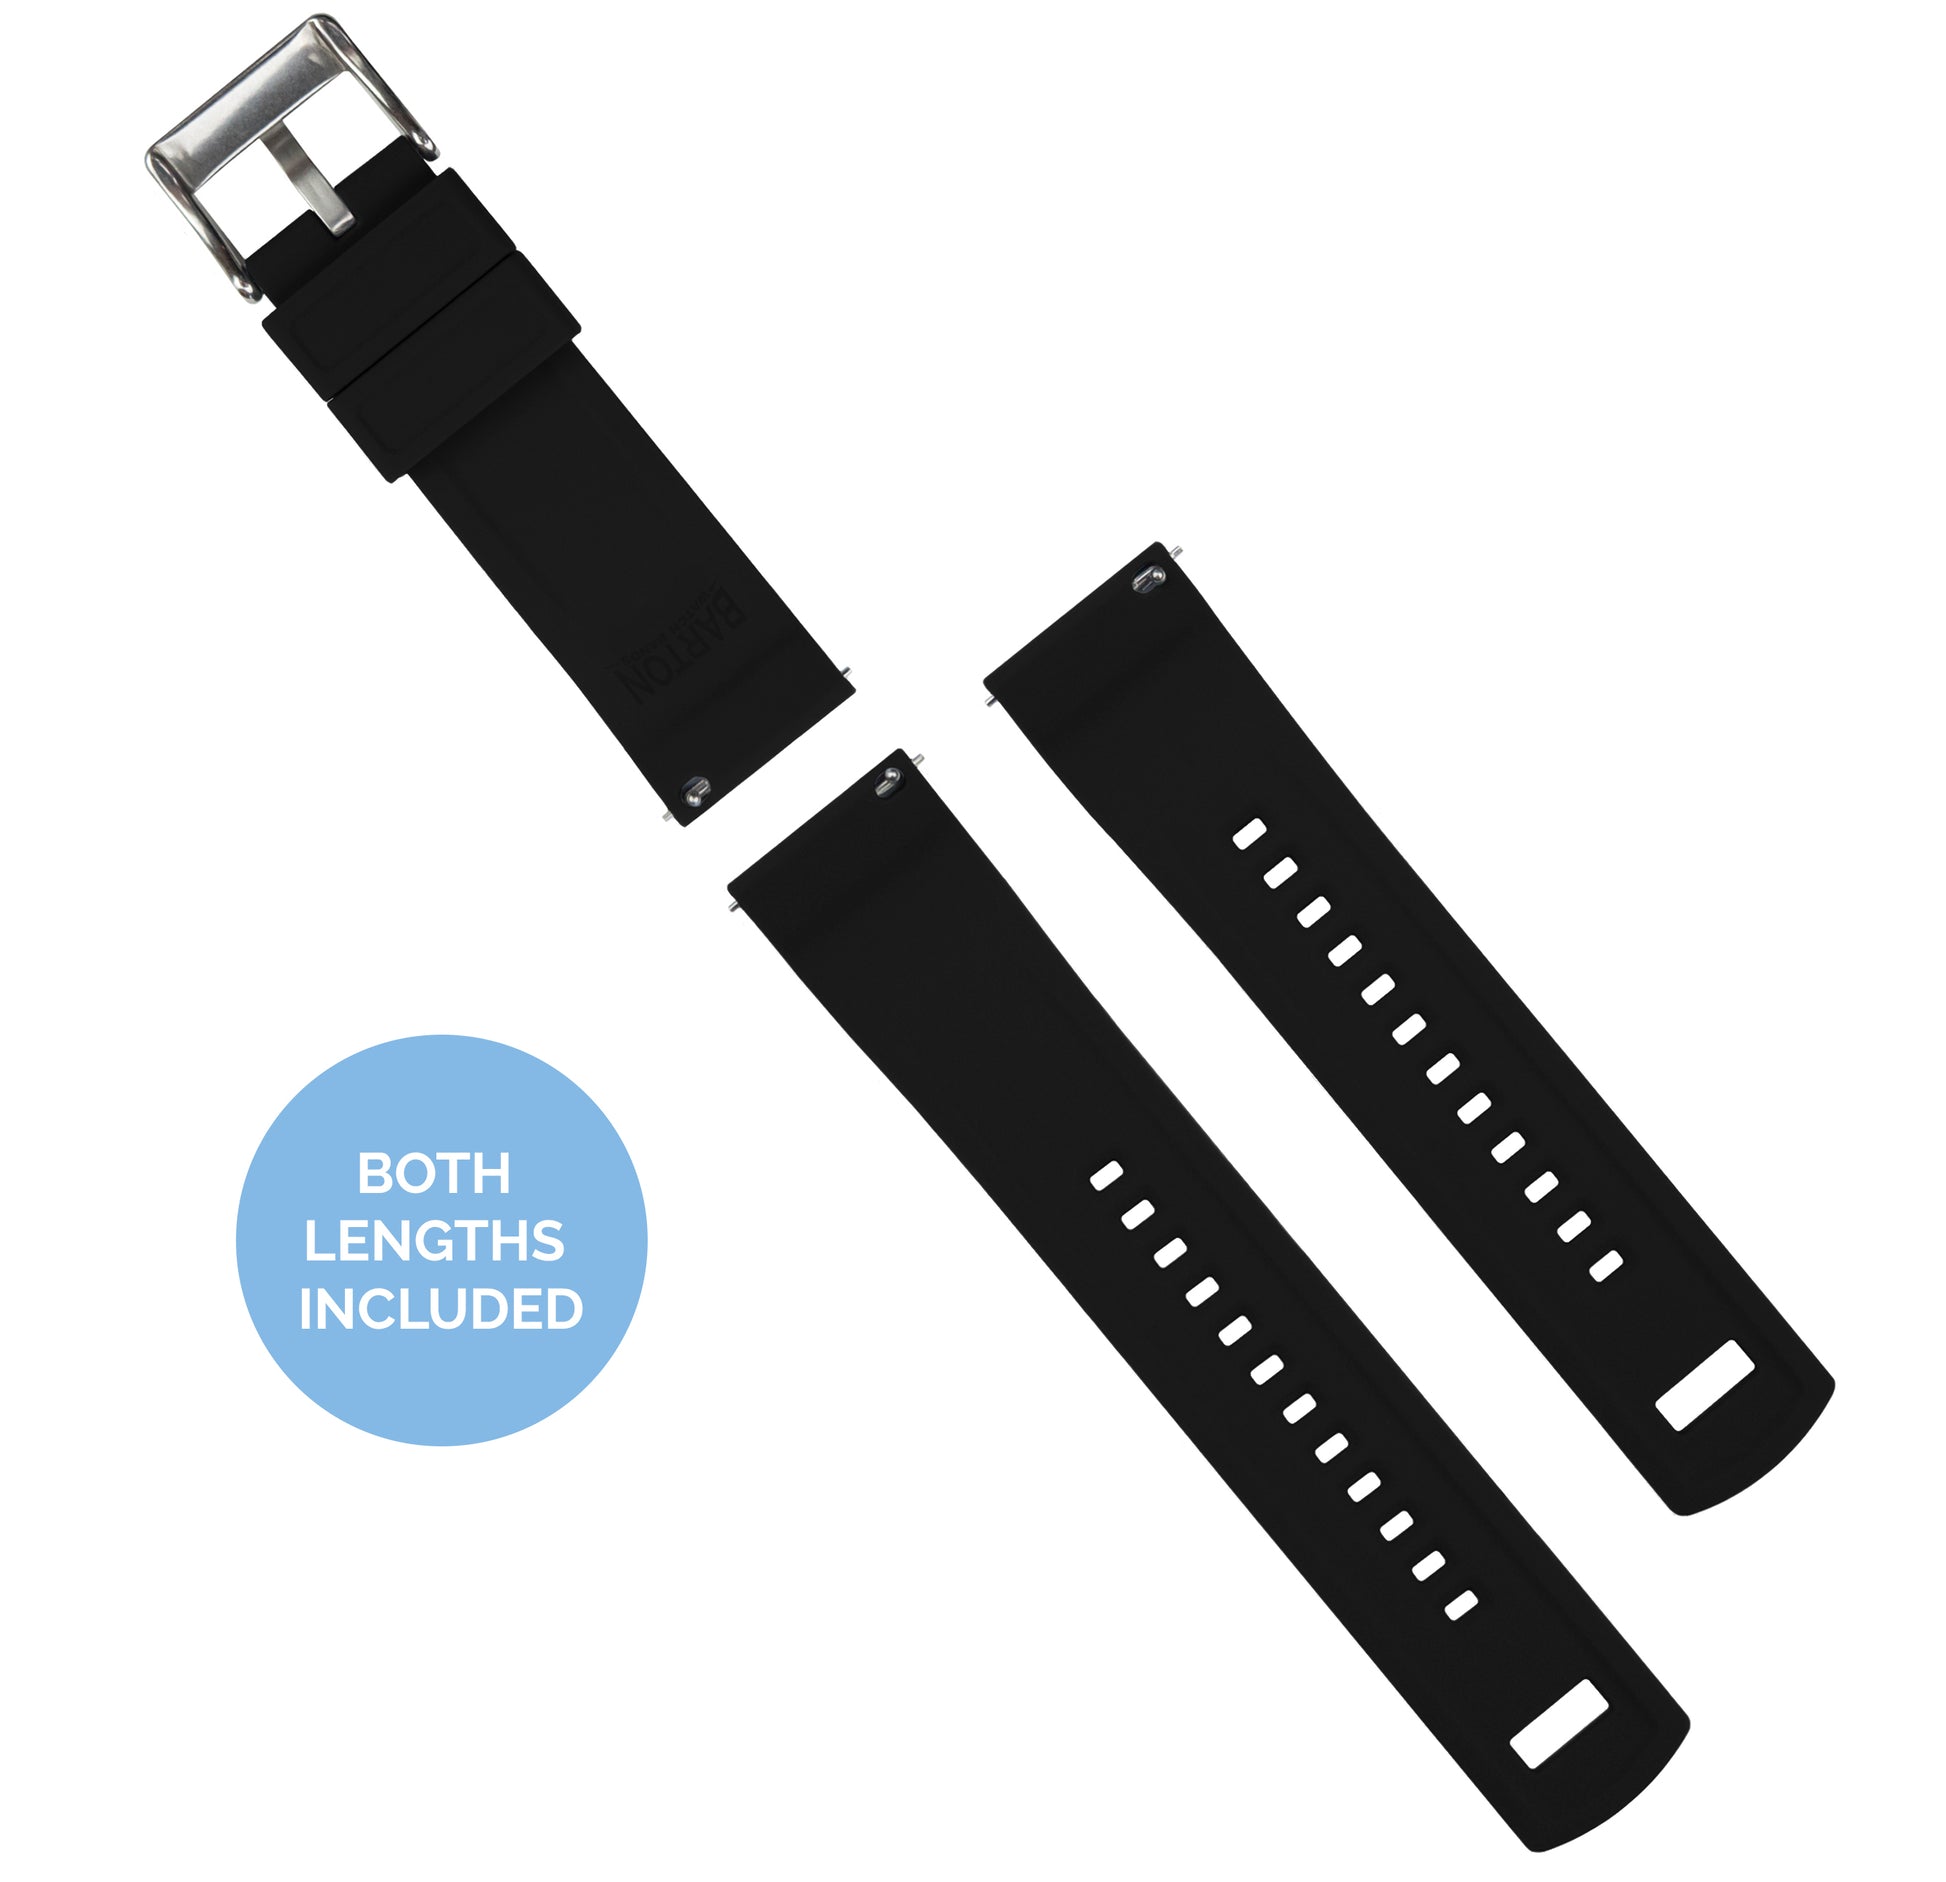 Samsung Galaxy Watch3 | Elite Silicone | Smoke Grey Top / Black Bottom - Barton Watch Bands